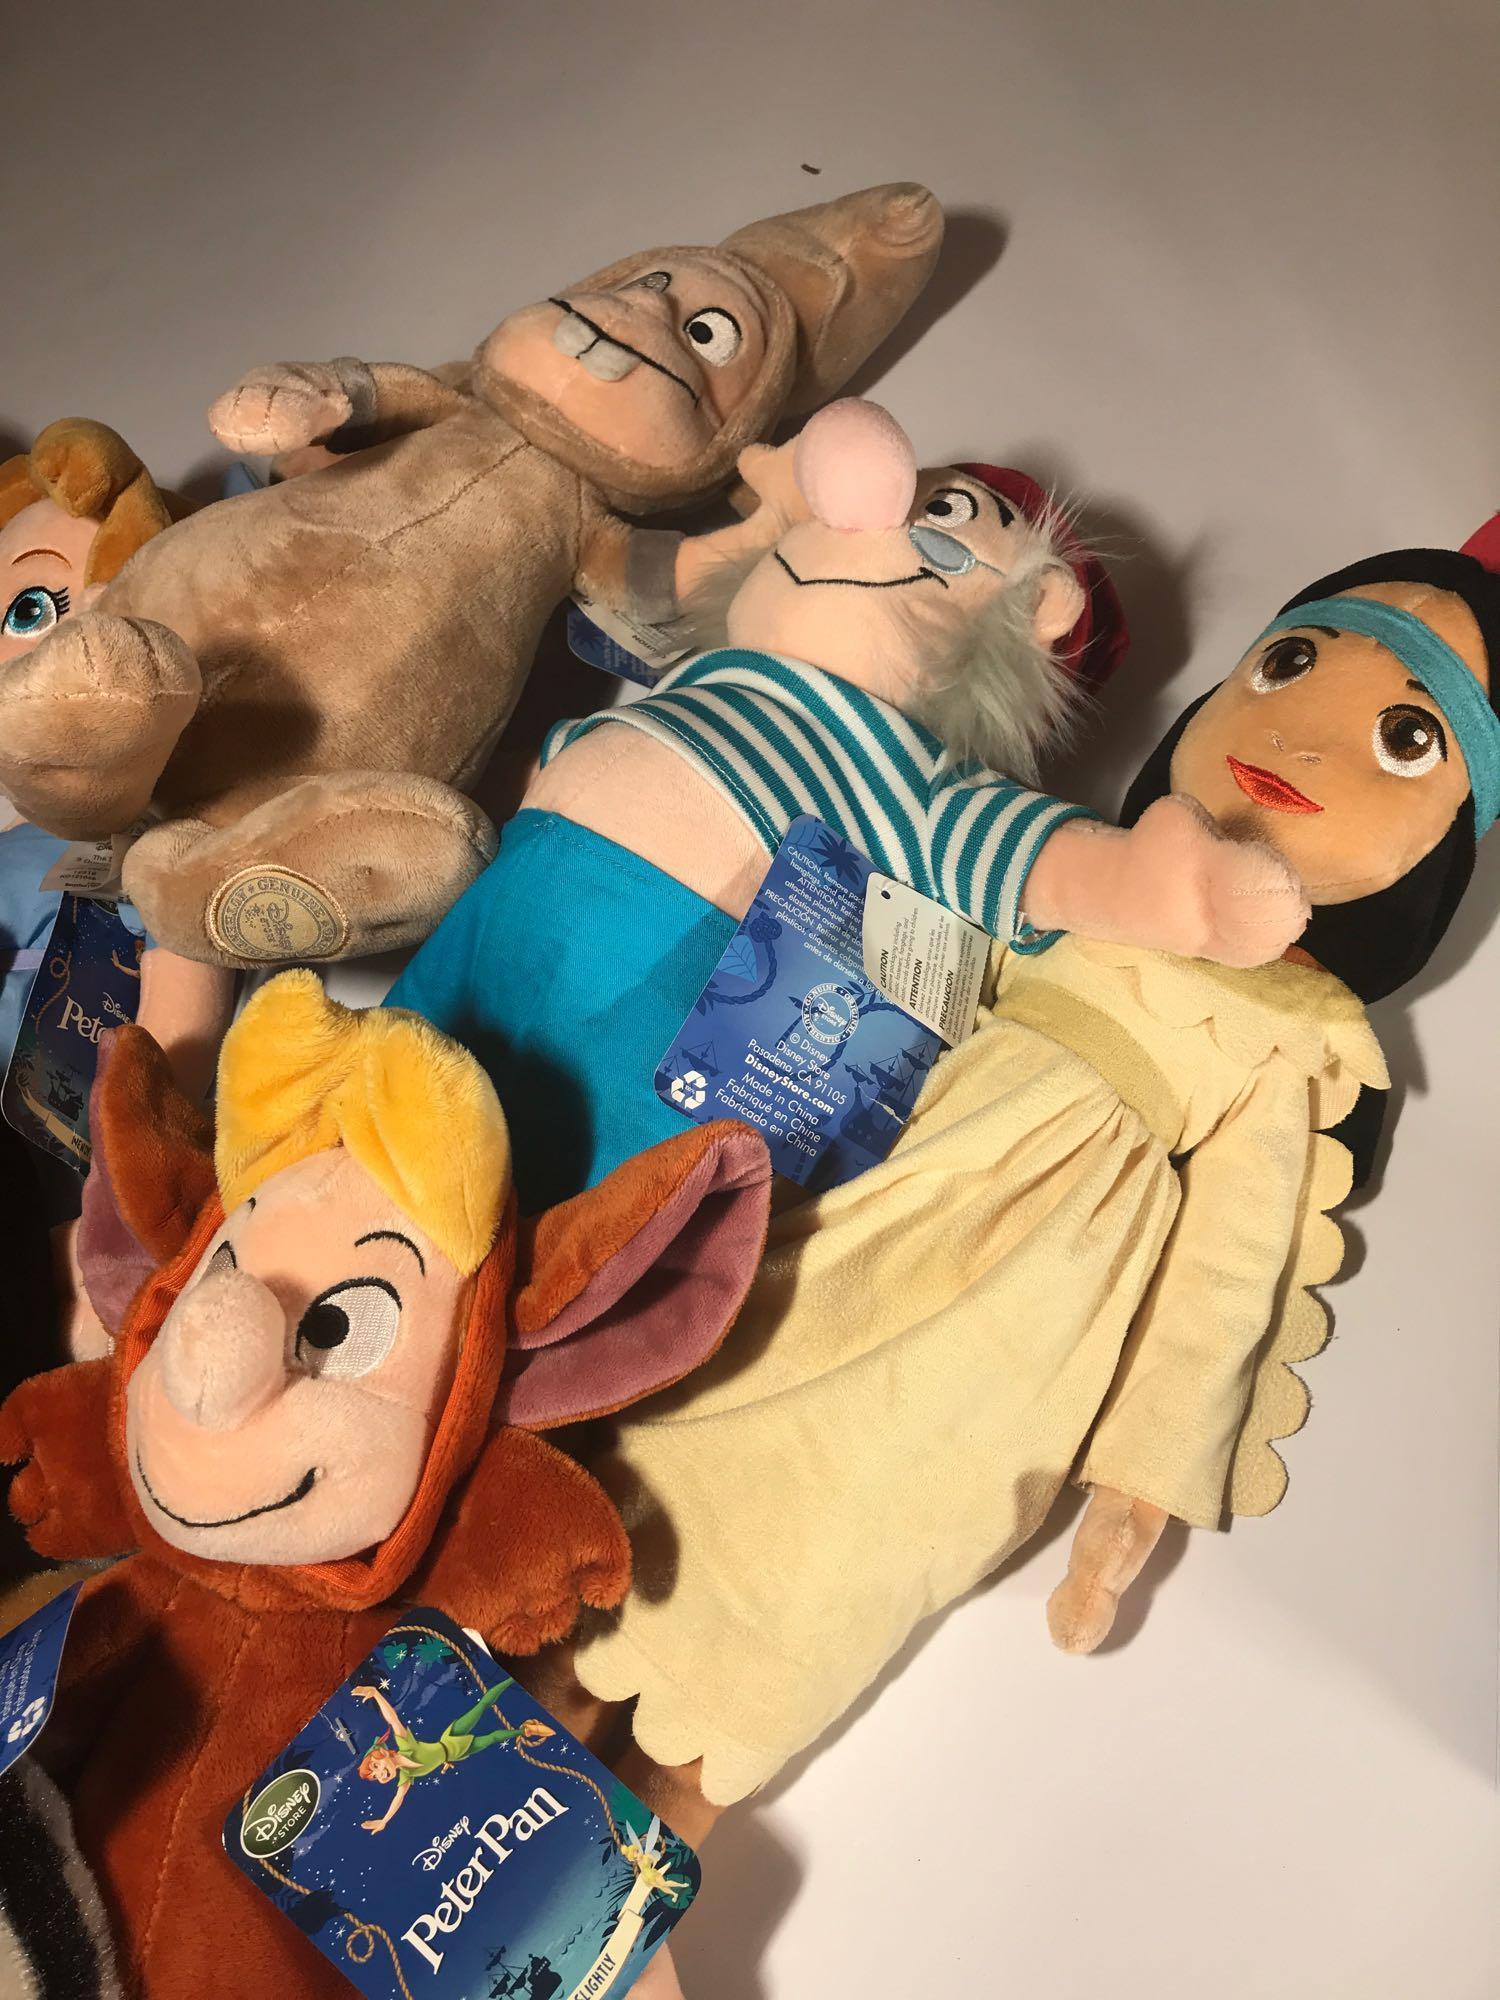 Disney Peter Pan Stuffed Toys 11 Units